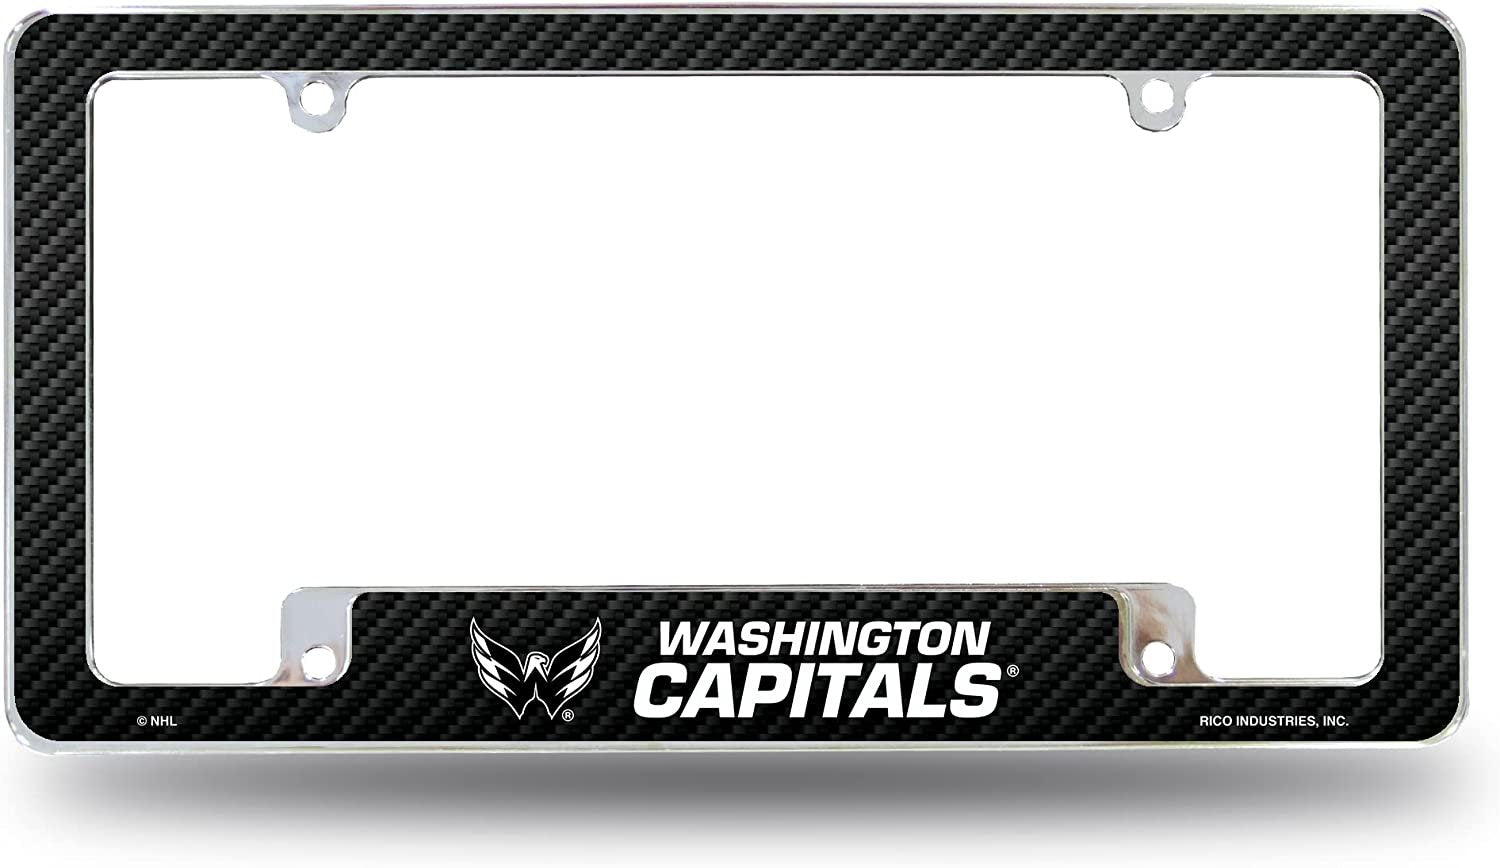 Washington Capitals Metal License Plate Frame Chrome Tag Cover Carbon Fiber Design 6x12 Inch